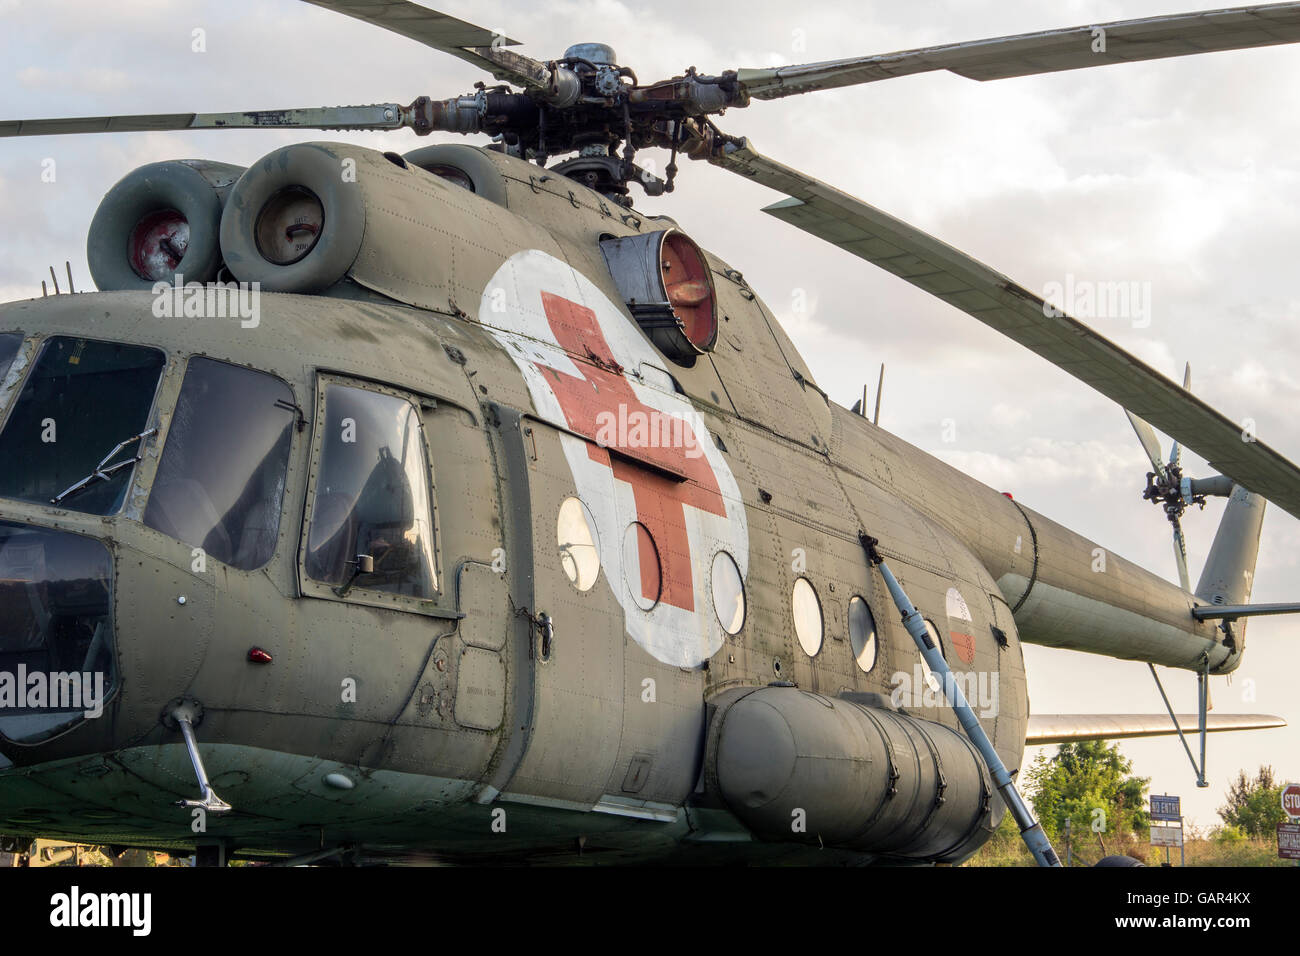 The Belgrade Aviation Museum, Serbia - Mil Mi-8 Soviet transport helicopter (NATO-Codename: Hip) Stock Photo